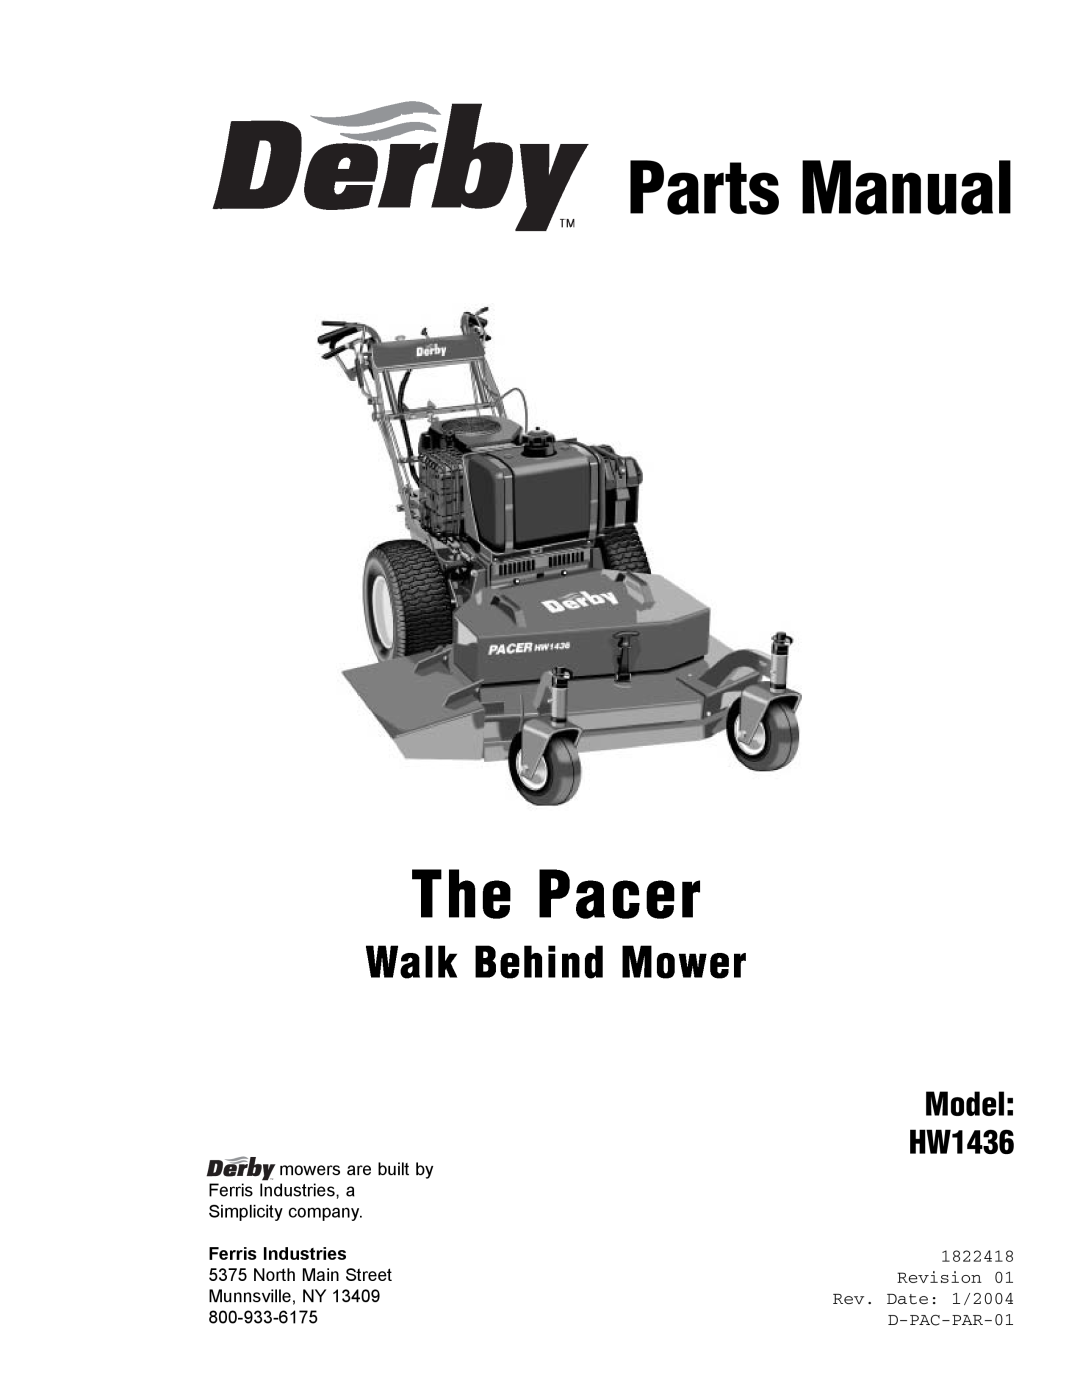 Simplicity HW1436 Model, Ferris Industries, Parts Manual, The Pacer, Walk Behind Mower, 1822418, Revision, D-PAC-PAR-01 